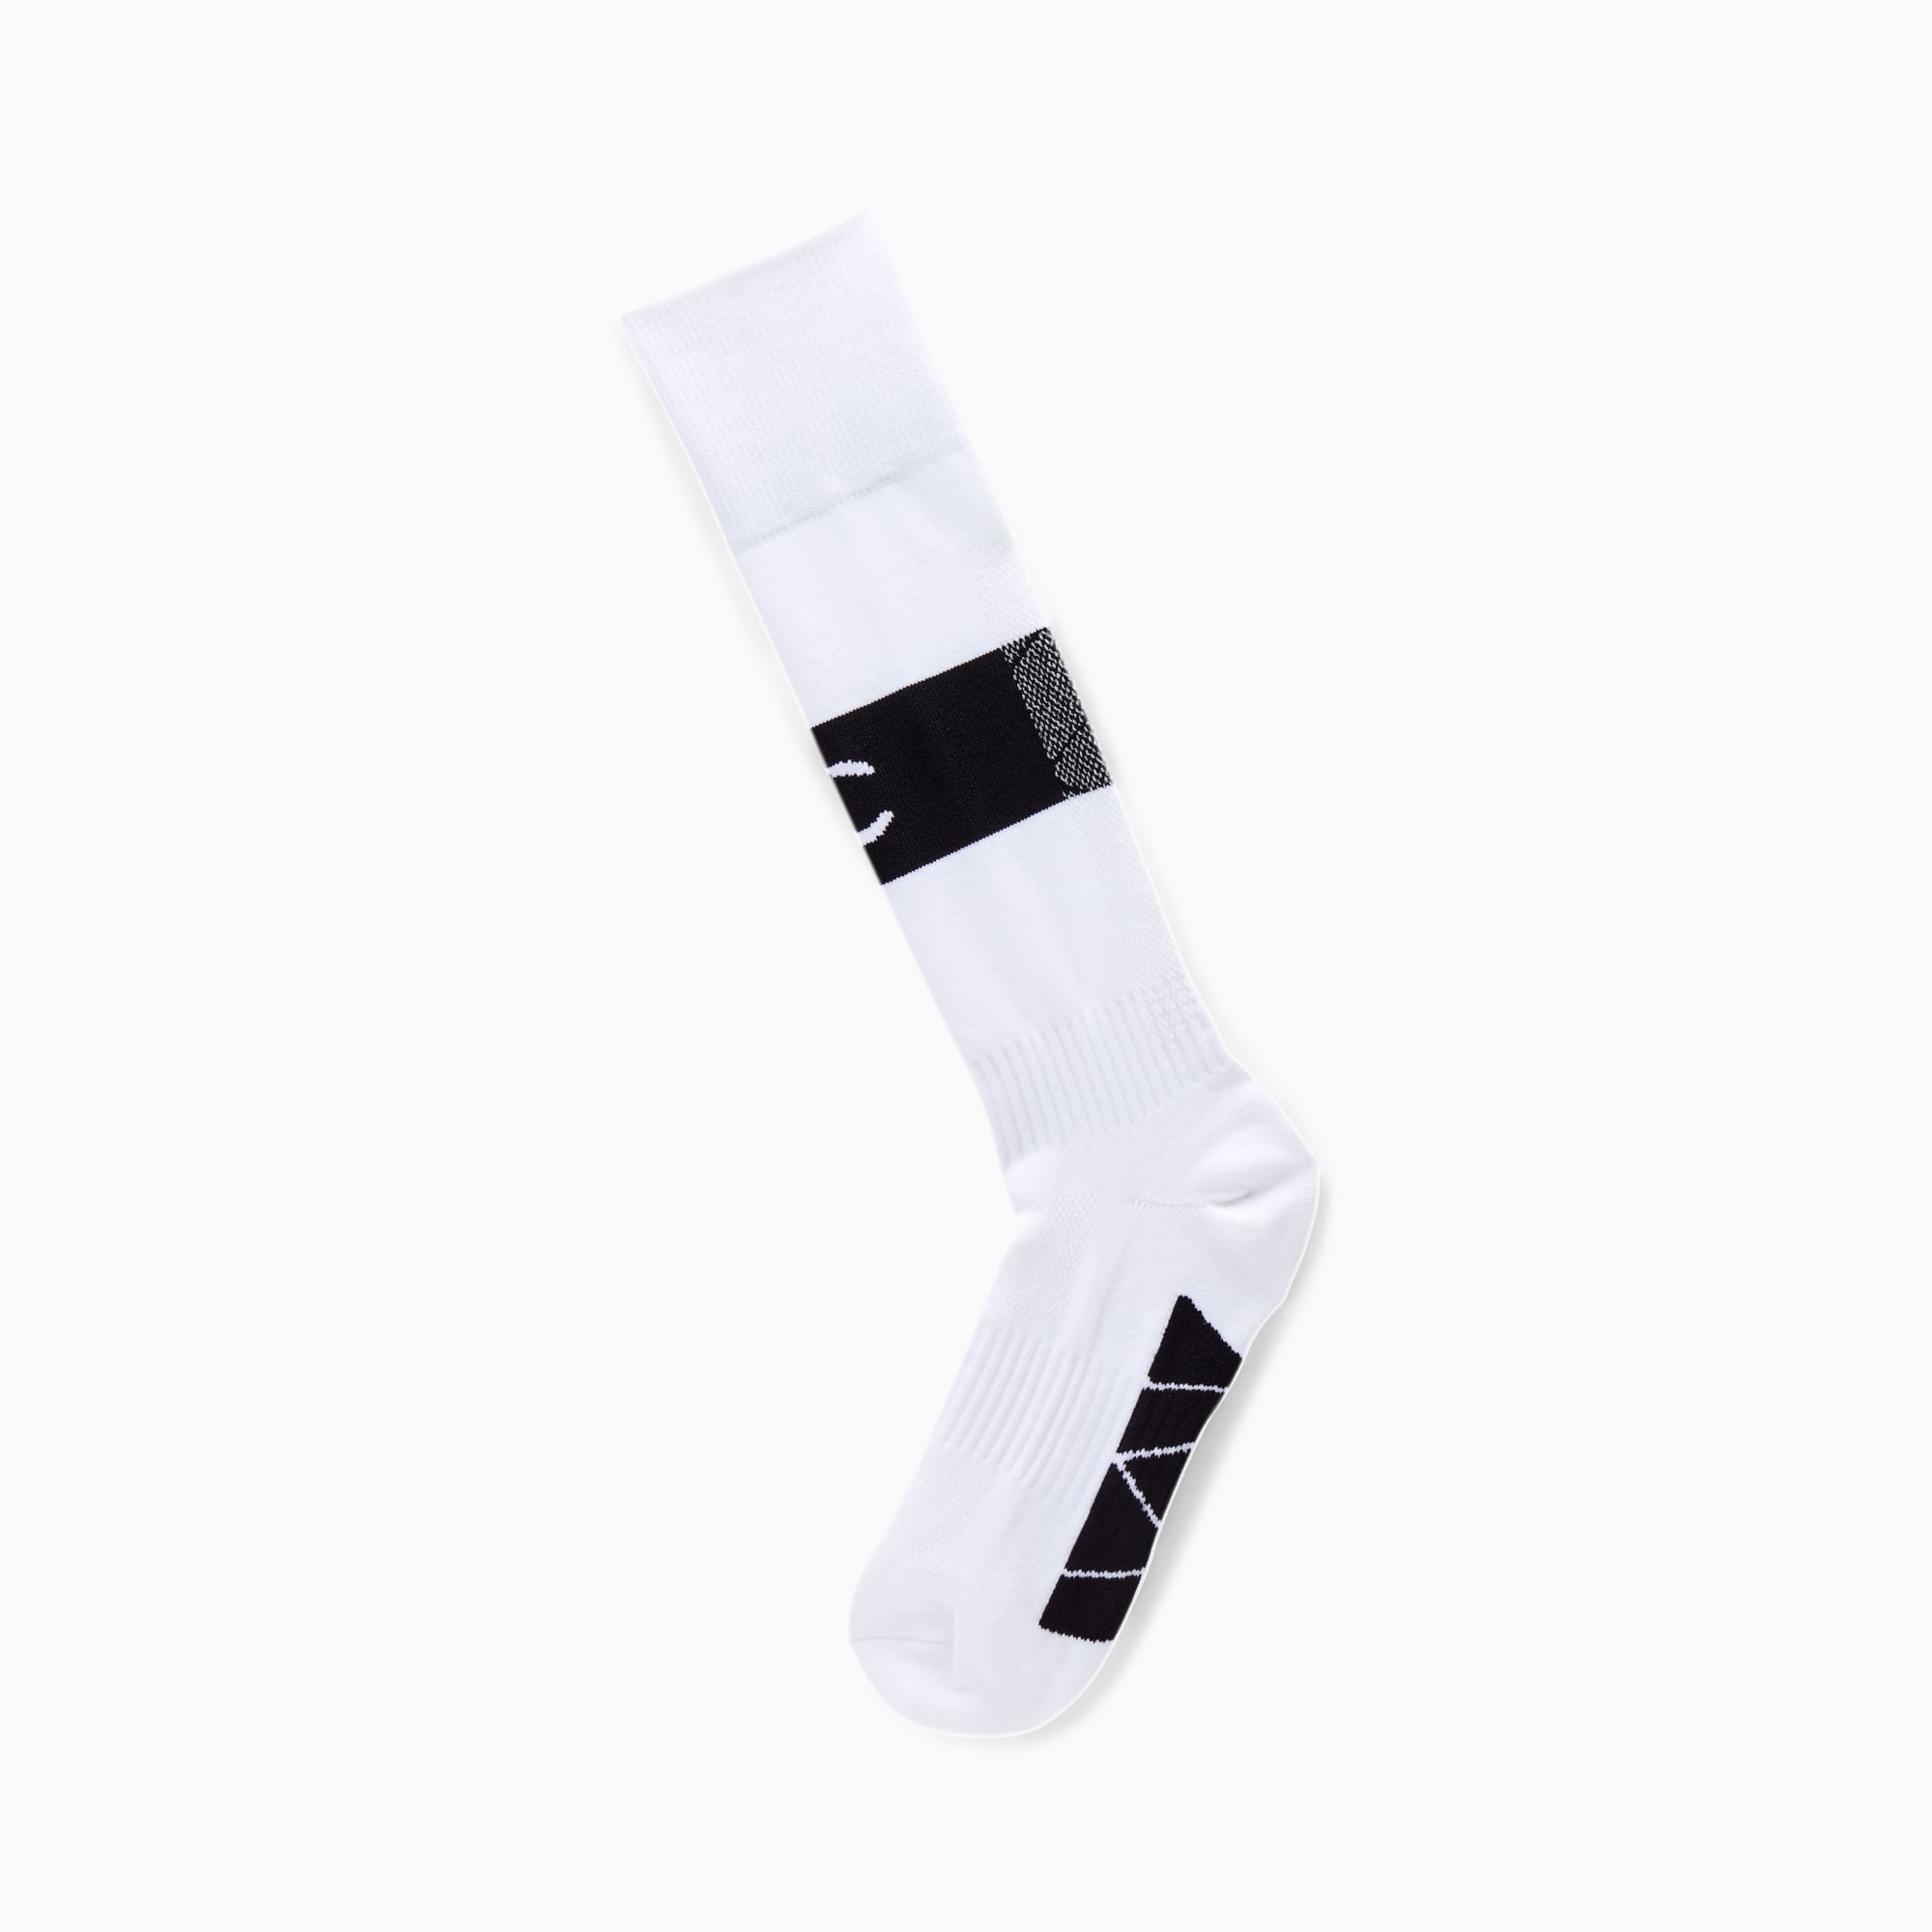 2 pares de calcetines altos para niño Puma Baby Mini Cats Lifestyle Sock 2P  935478 New Navy / White 03